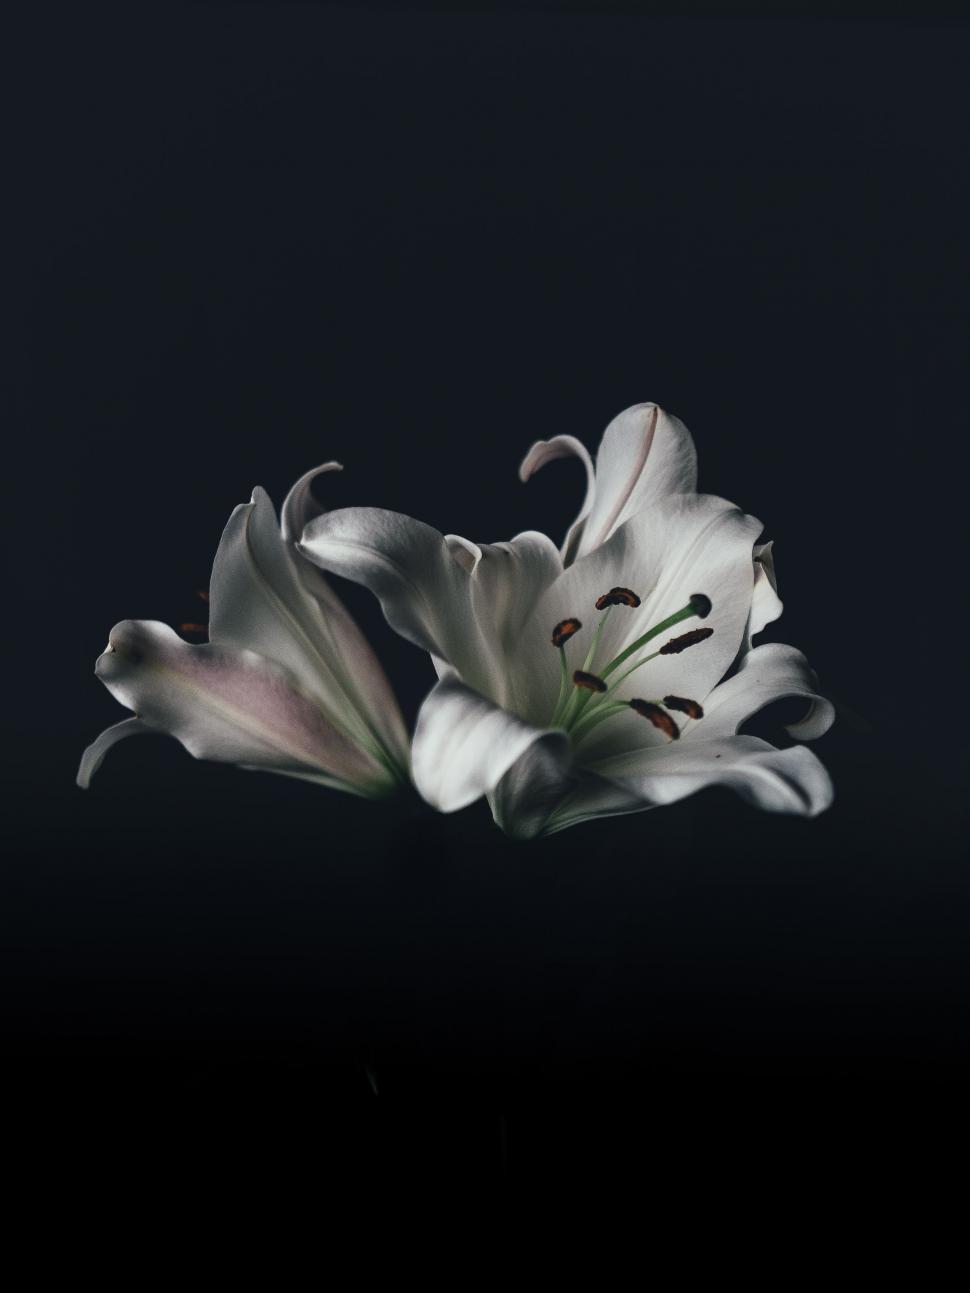 Free Image of Monochrome Flower in Bloom 